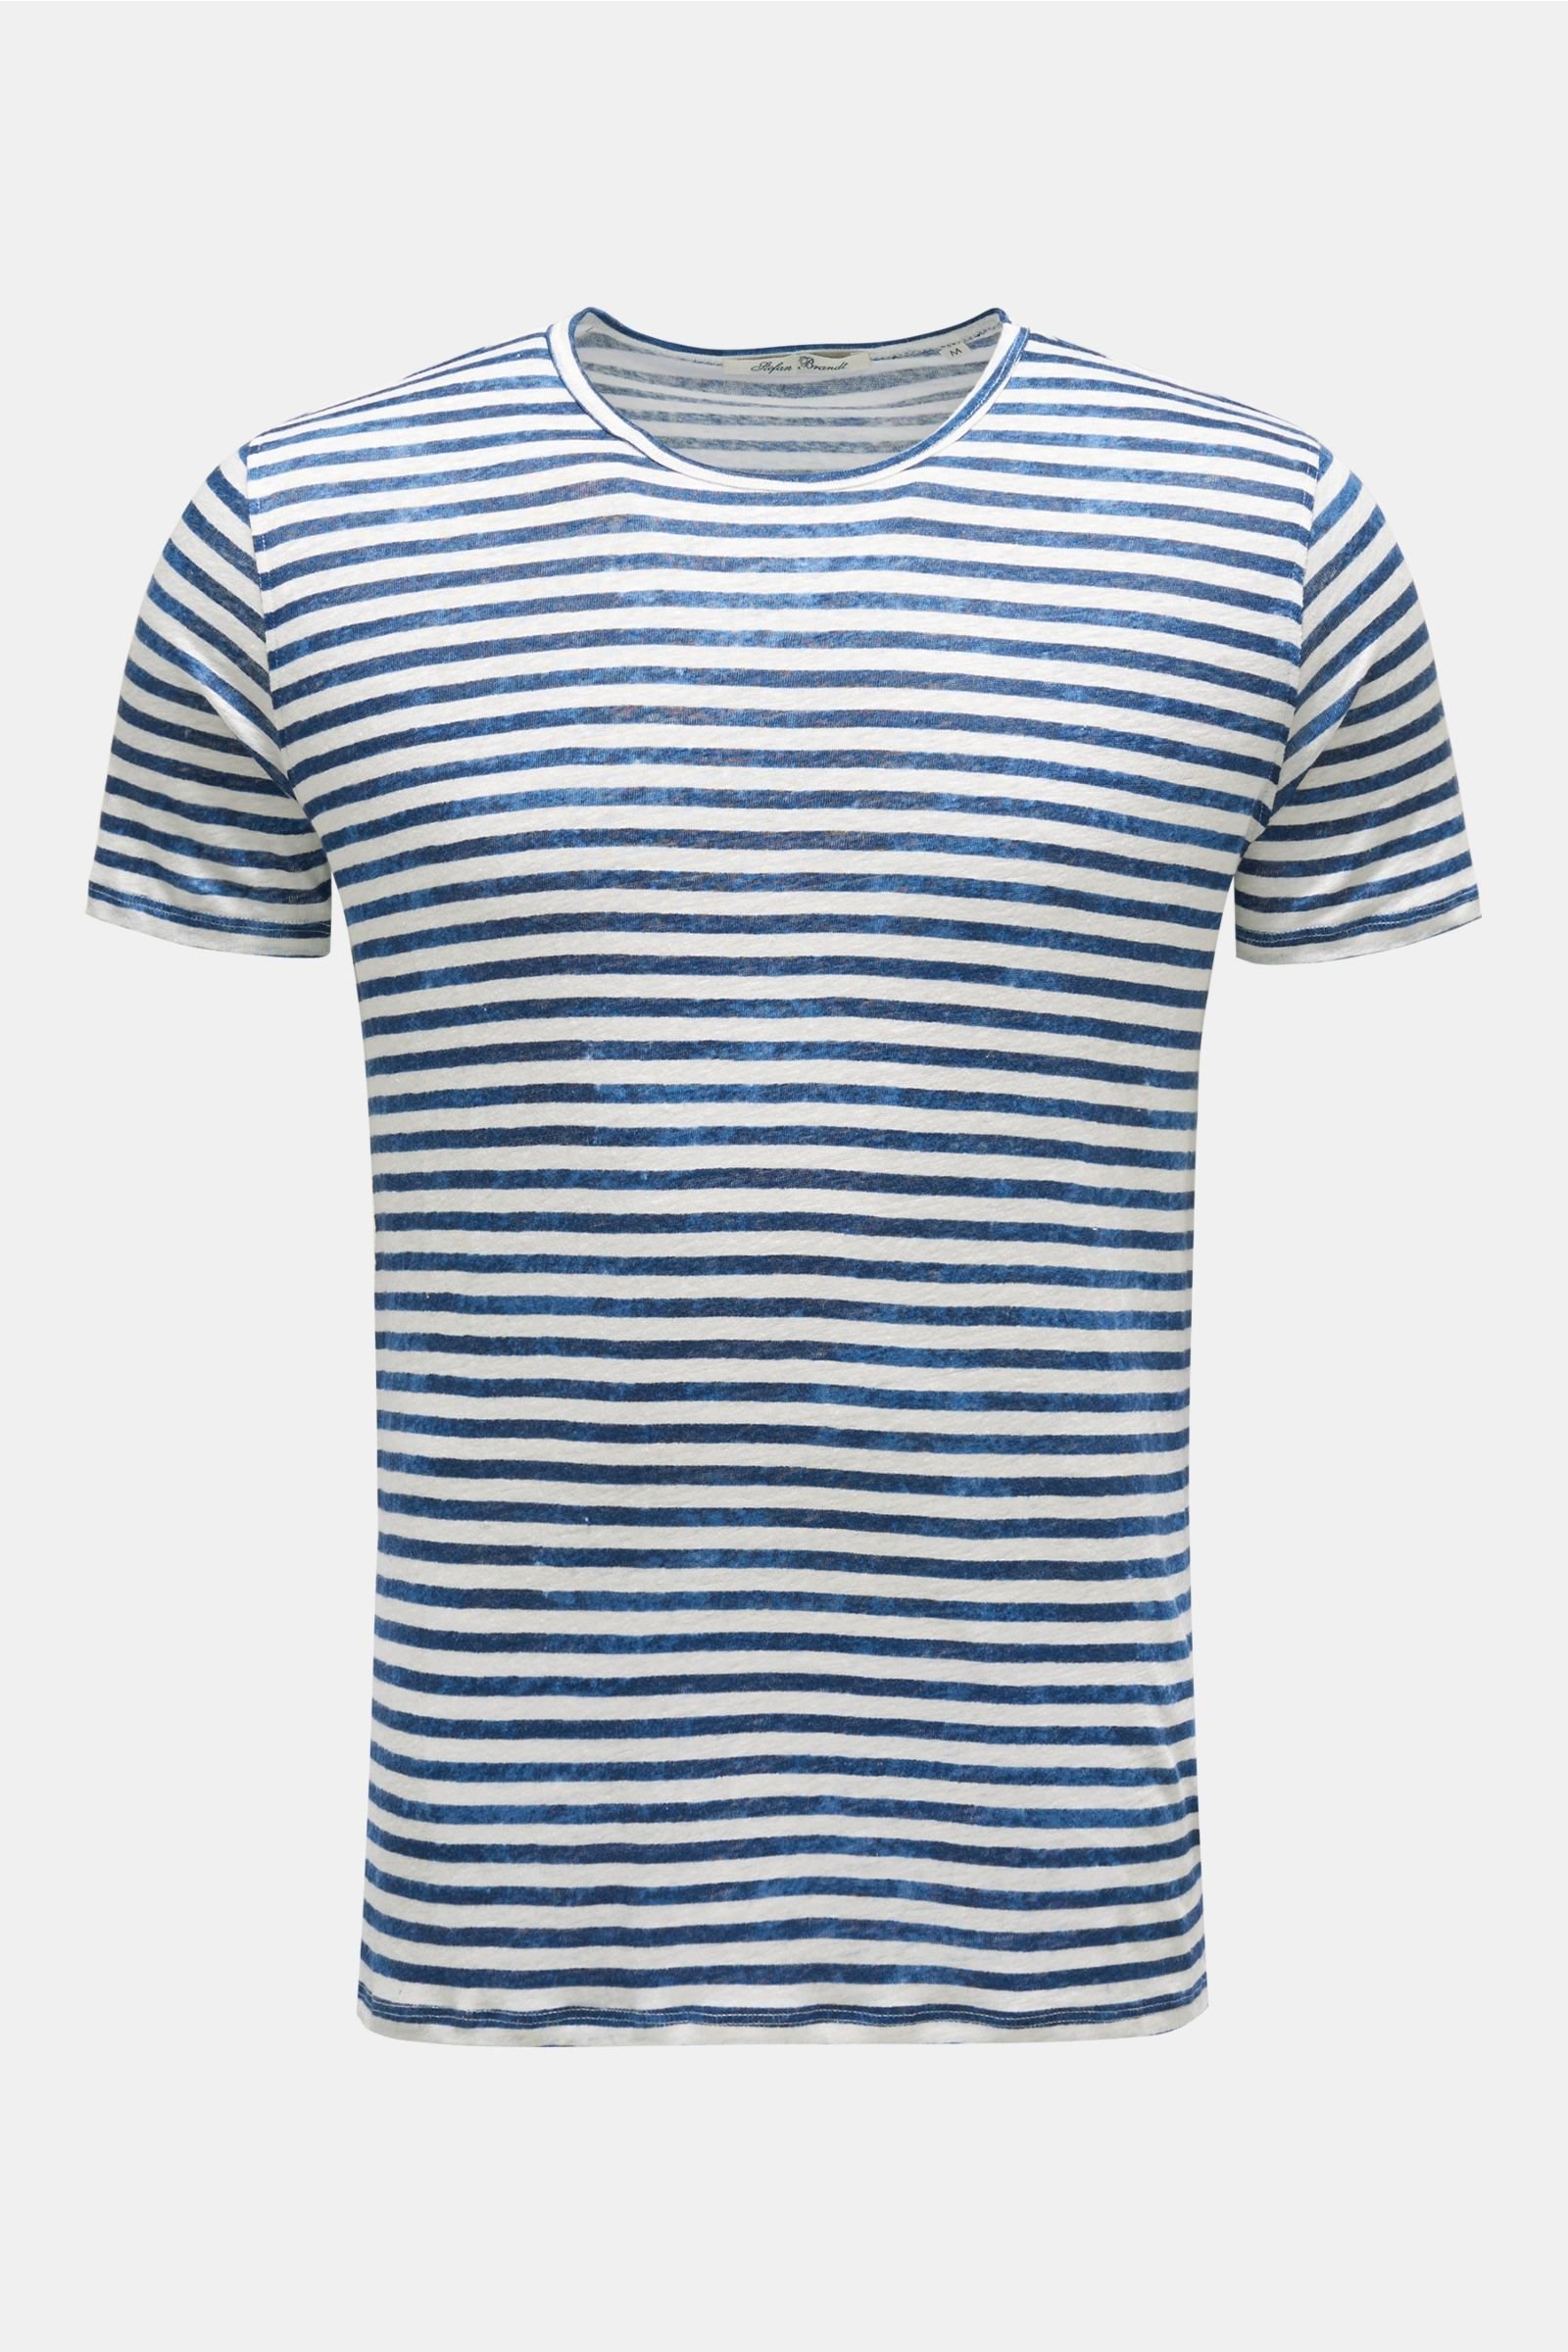 Leinen R-Neck T-Shirt navy/weiß gestreift